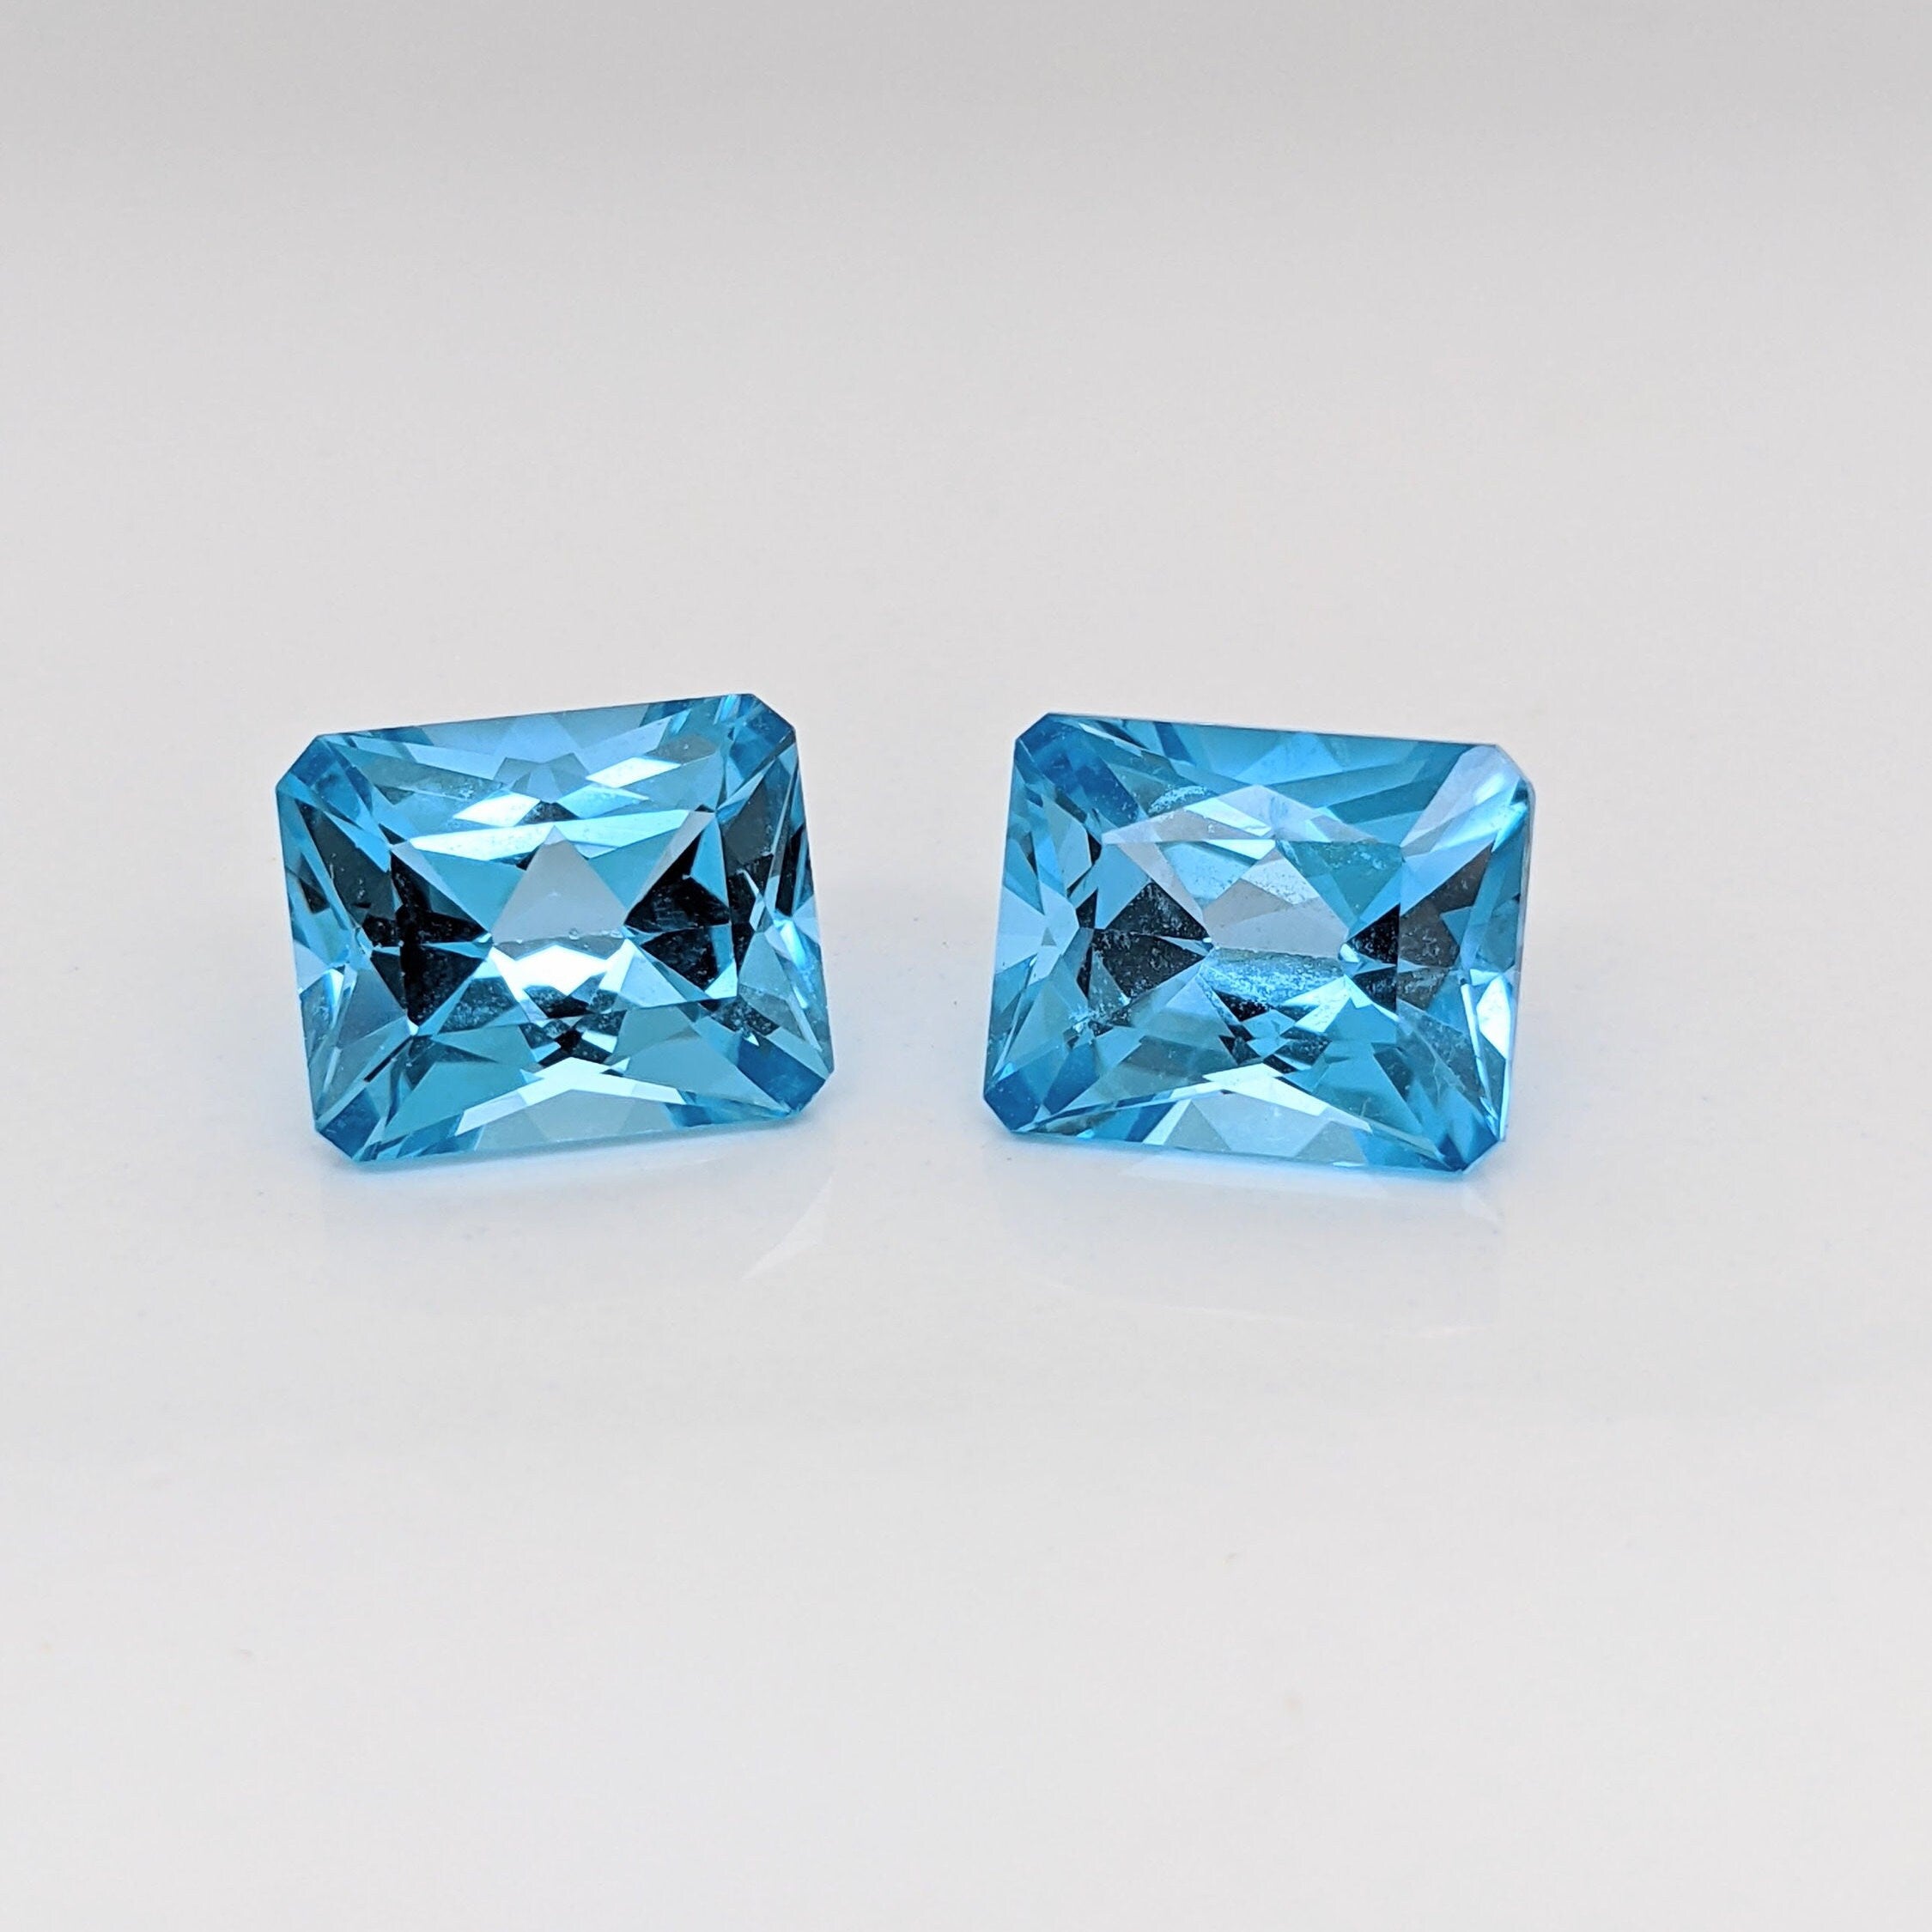 Swiss Blue Topaz Natural Loose Gemstone | Radiant Cut | 12x10mm 11x9mm 9x7mm | December Birthstone | Center Stone | Blue Gem | Certified